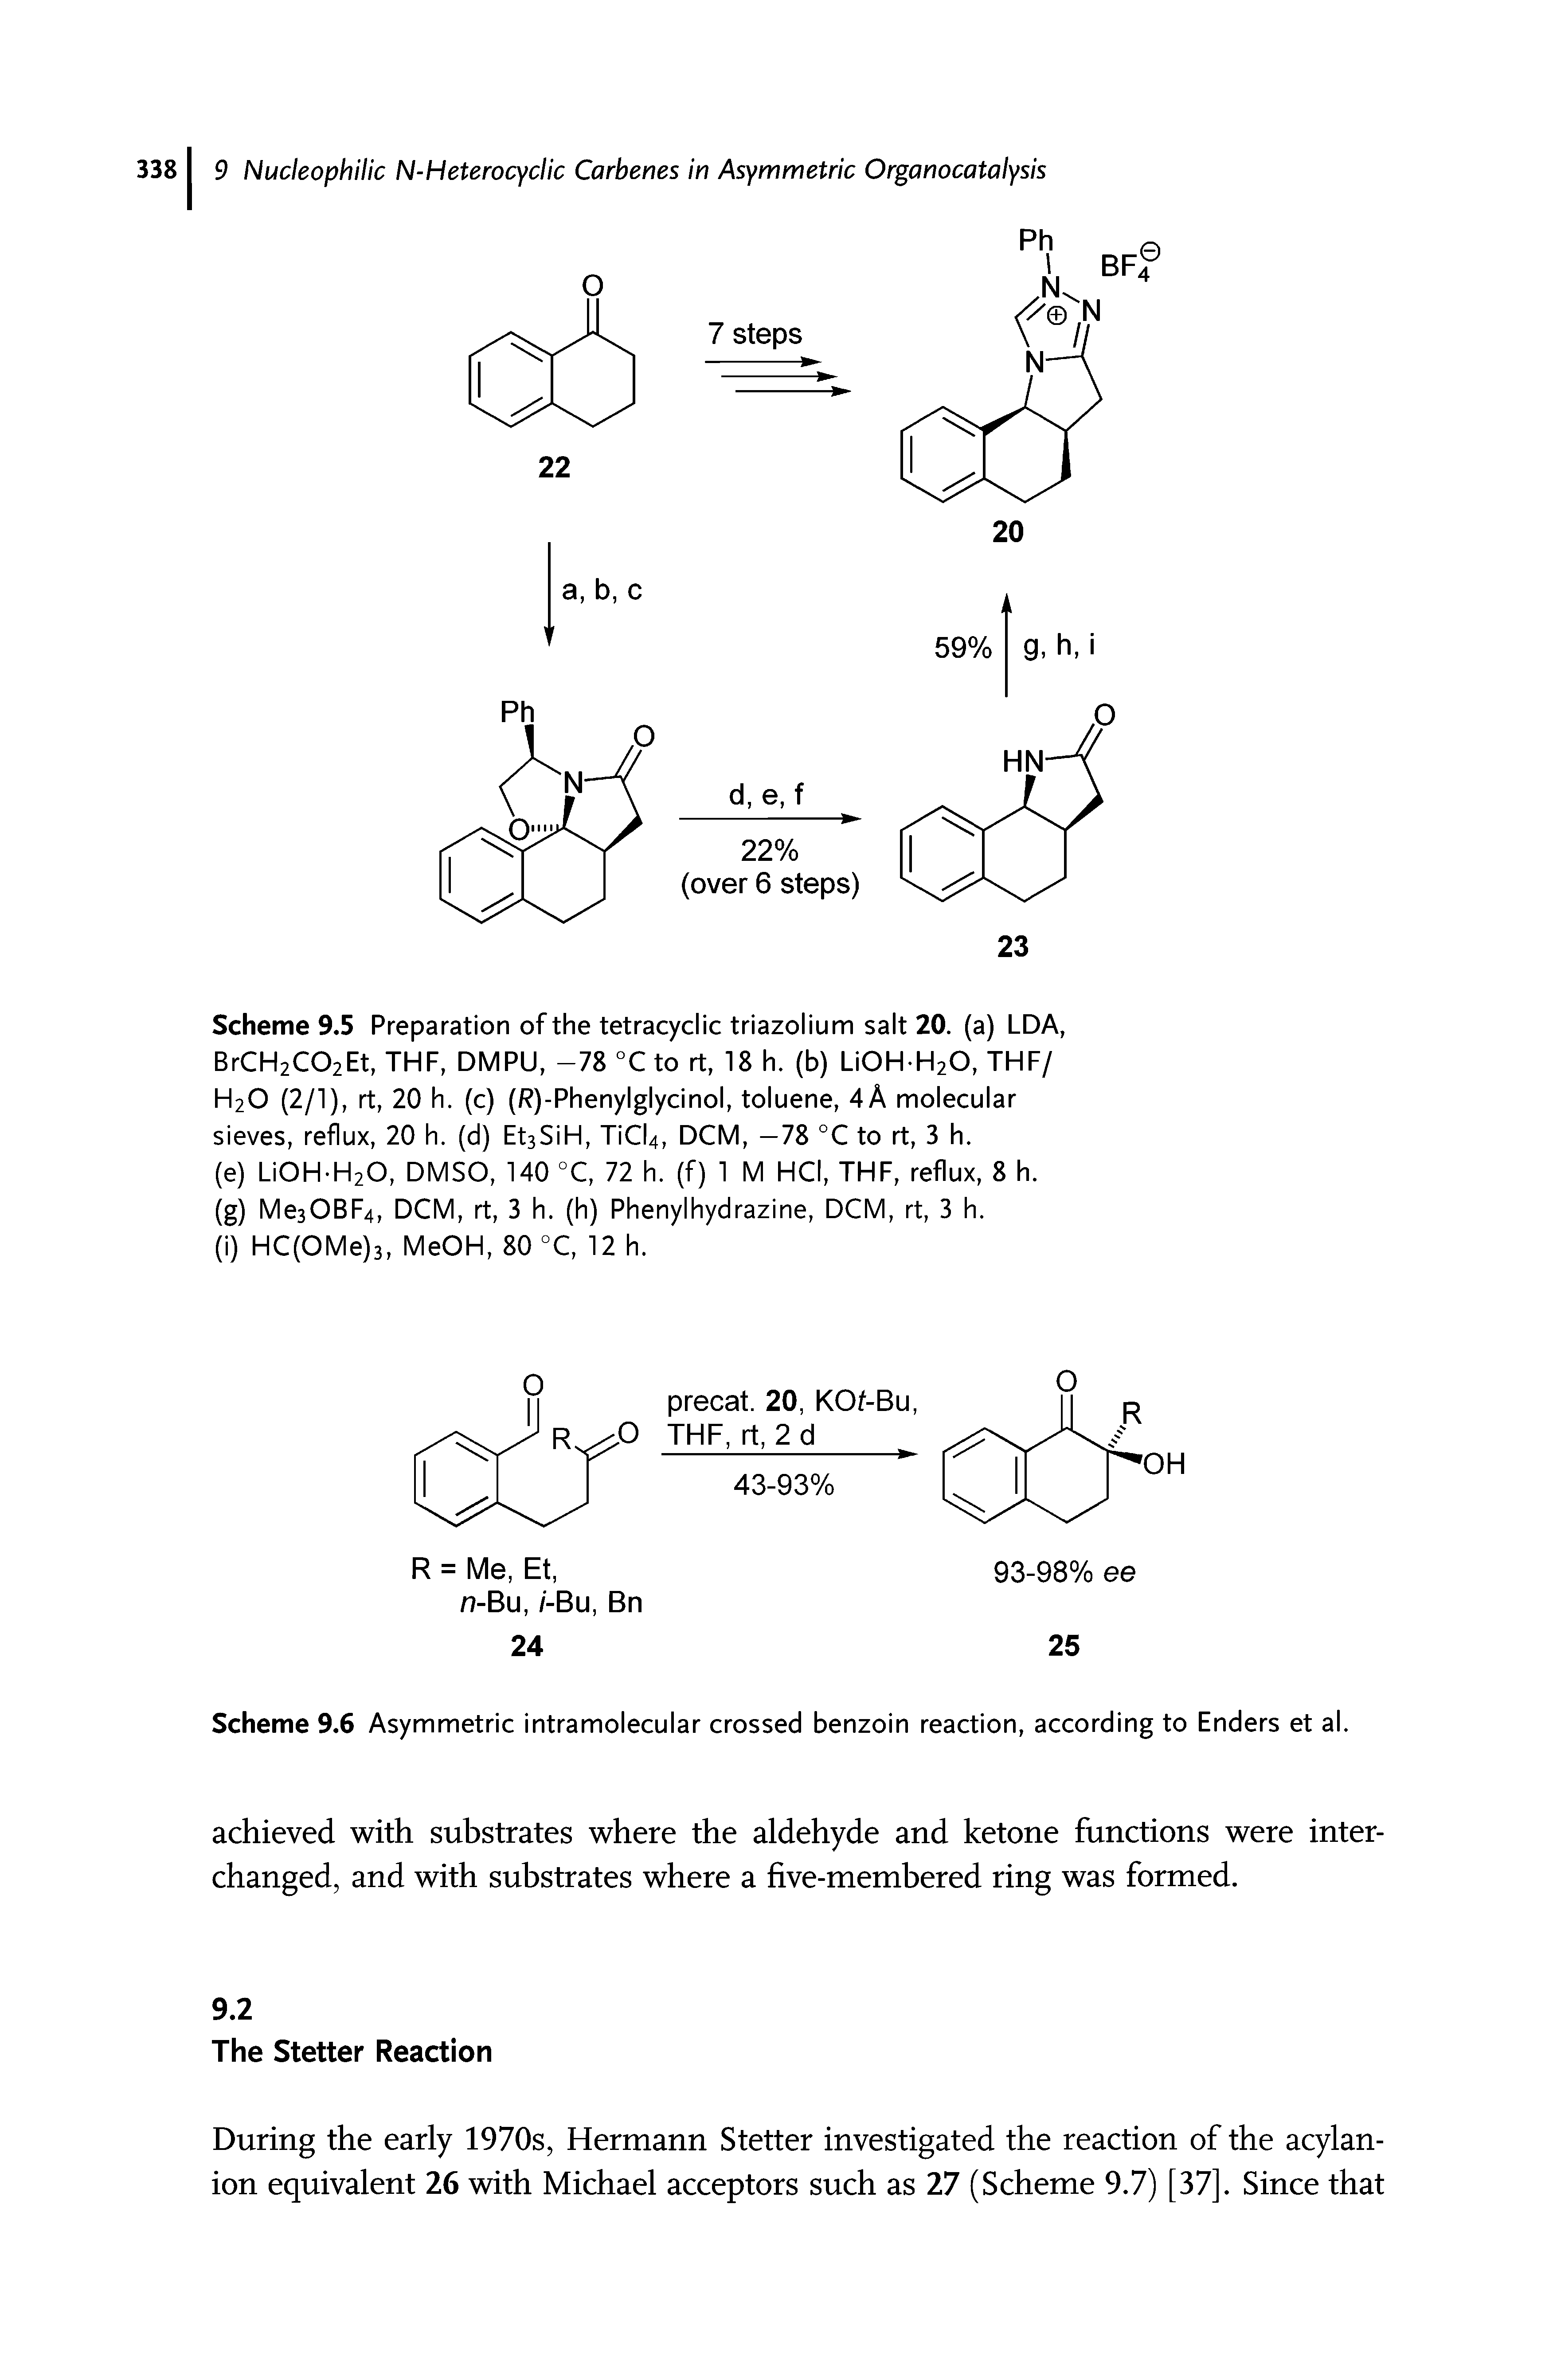 Scheme 9.6 Asymmetric intramolecular crossed benzoin reaction, according to Enders et al.